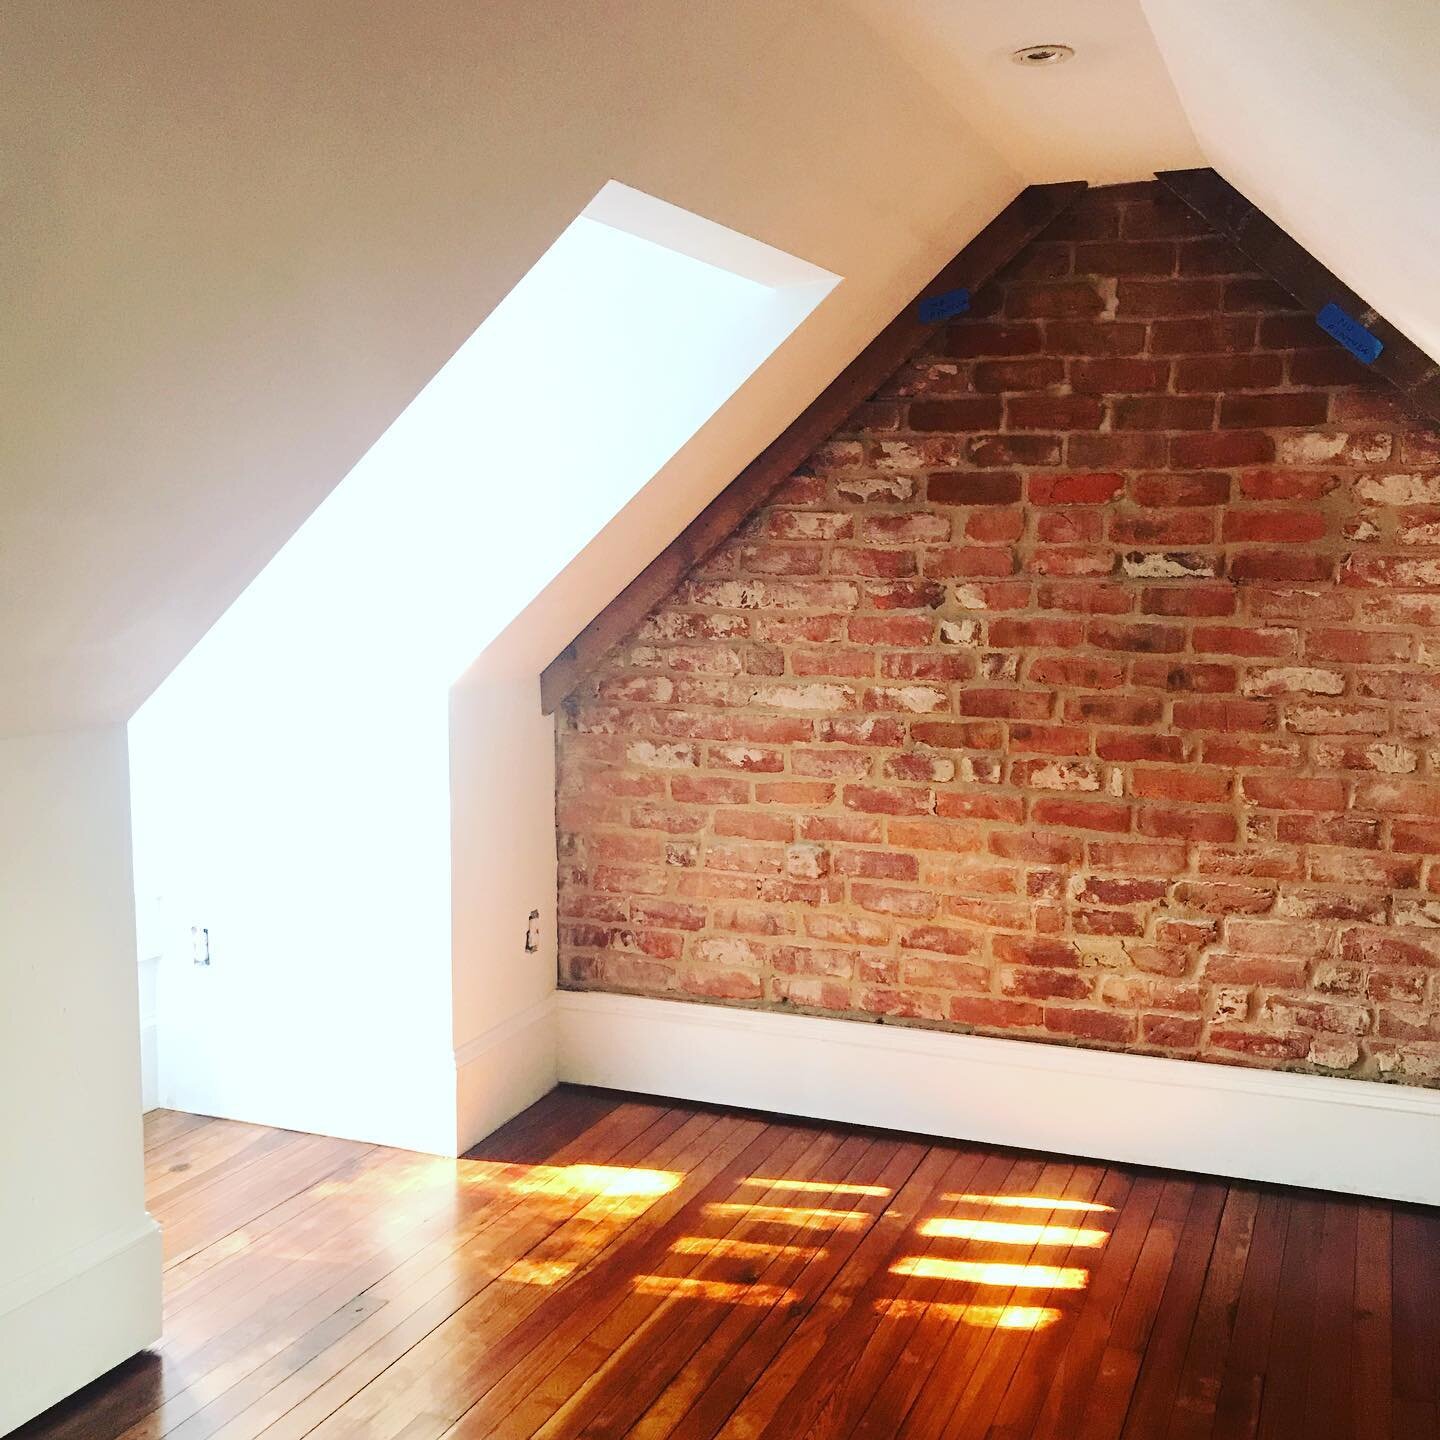 Let the sunshine in! #thisoldhouse #historicrenovation #atticbedroom 
#morninglight #exposedbrick